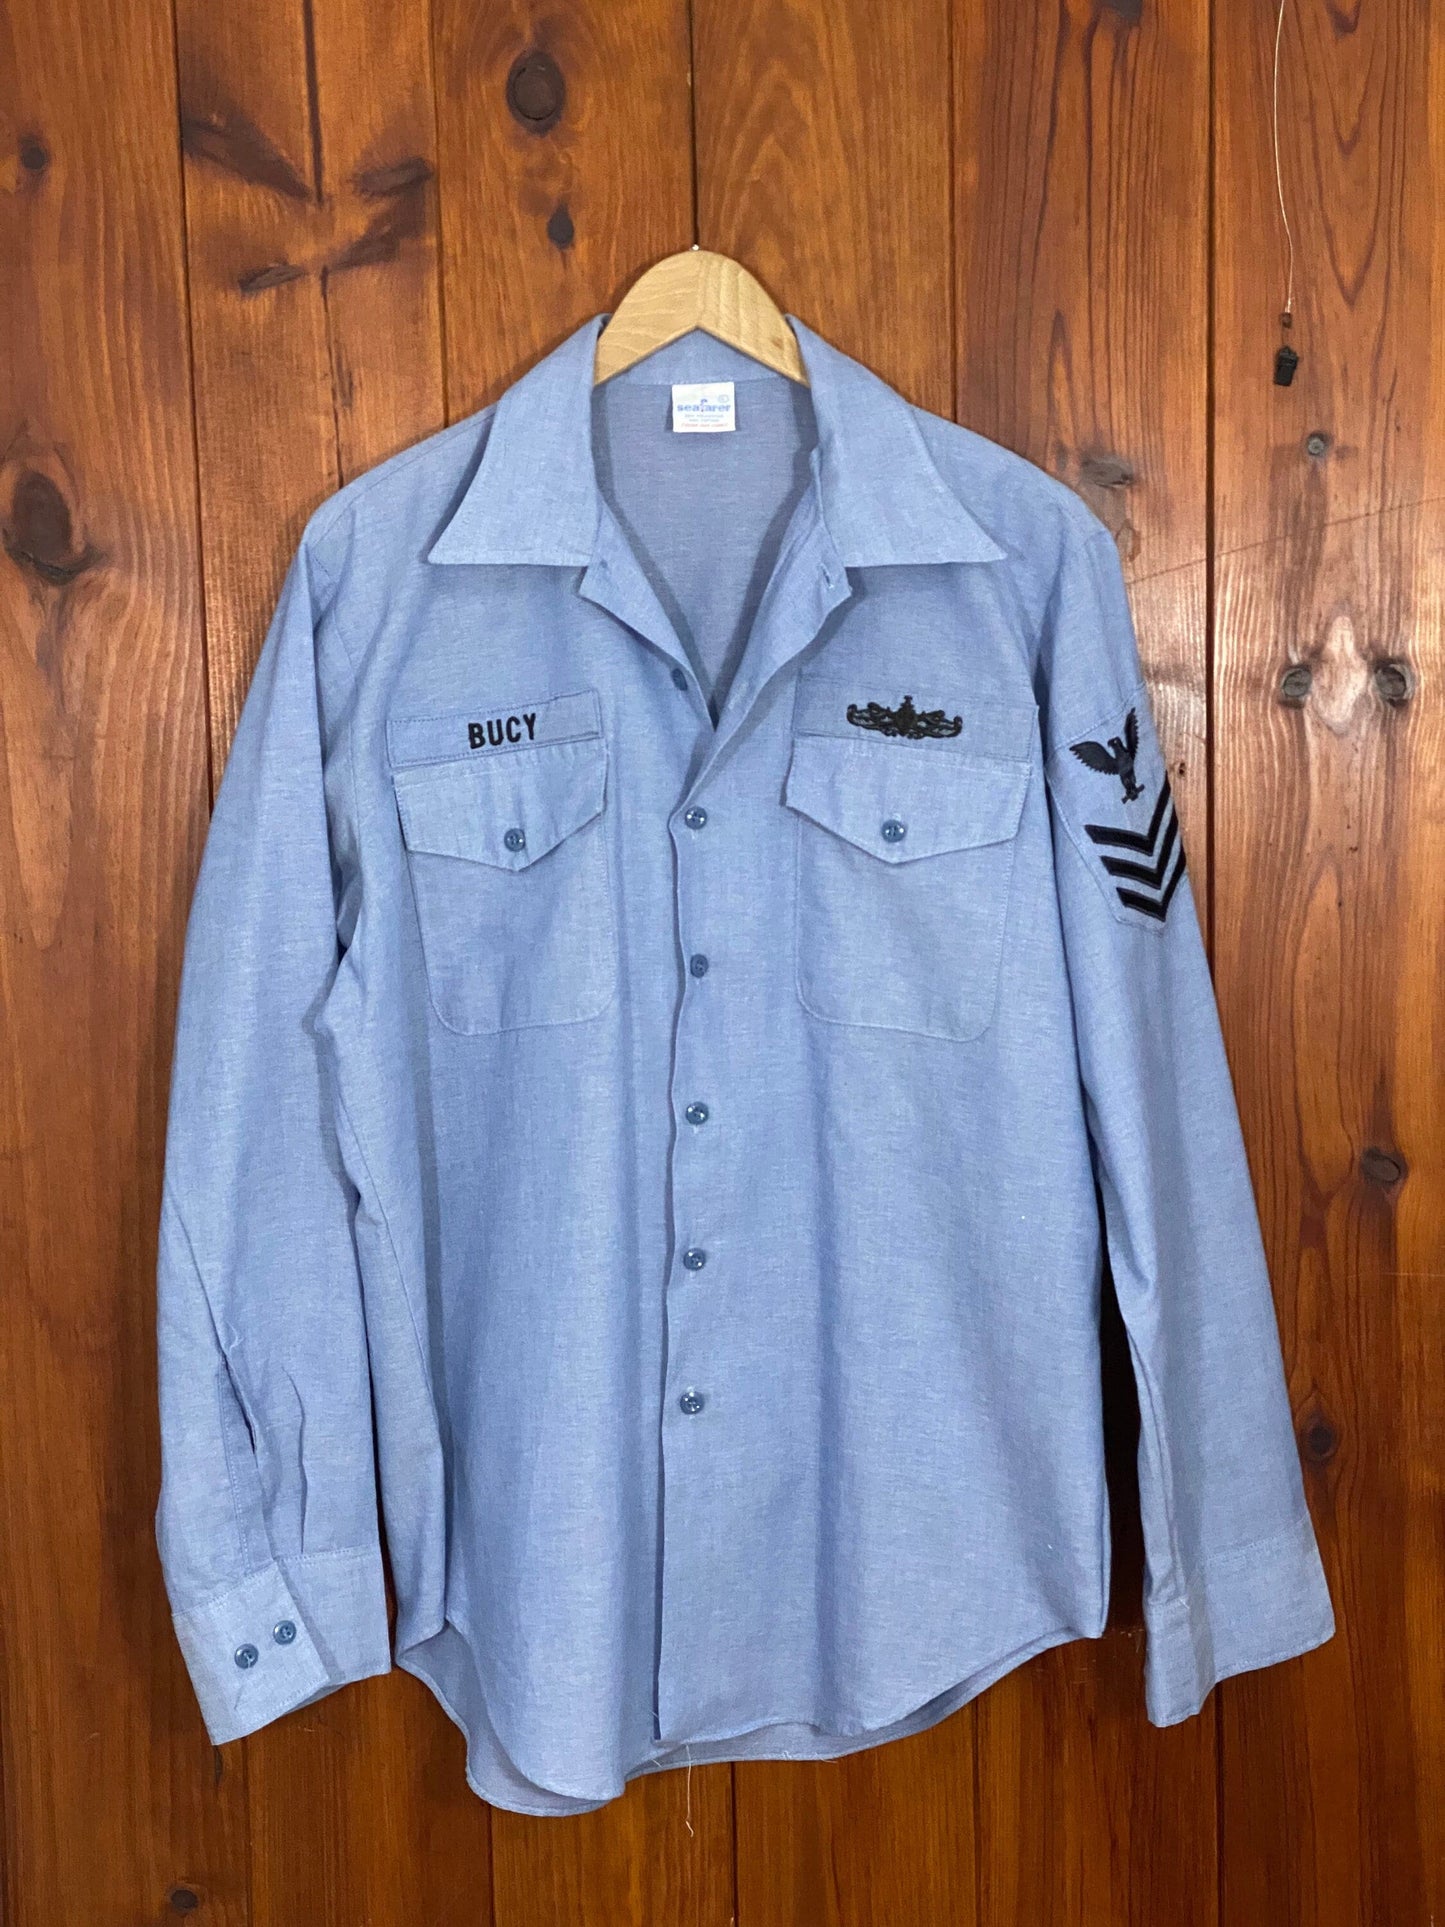 XL. Original Seafarer Vintage 80s US Navy utility shirt